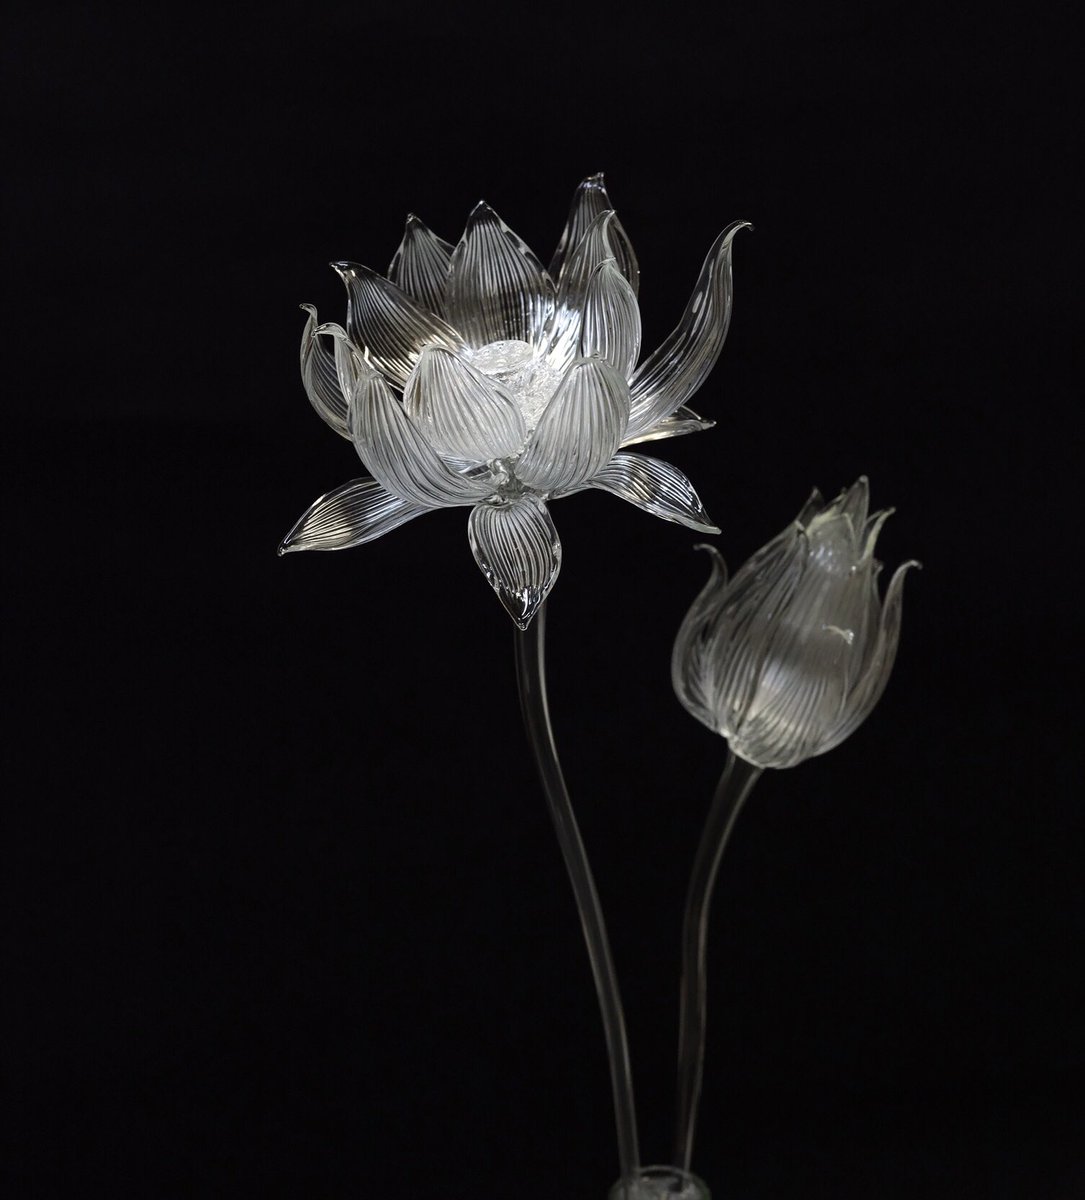 Utsusemi Glass Sculpture Di Twitter 梅雨といえば蓮の花作るよ 静かな佇まいになるように生けて 頭が重いので何度か炎で茎を曲げてようやく安定 夏真っ盛りなので涼やかな感じになり これで蓮の花は終了 蓮のはな ハス ランプワーク Borosilicate